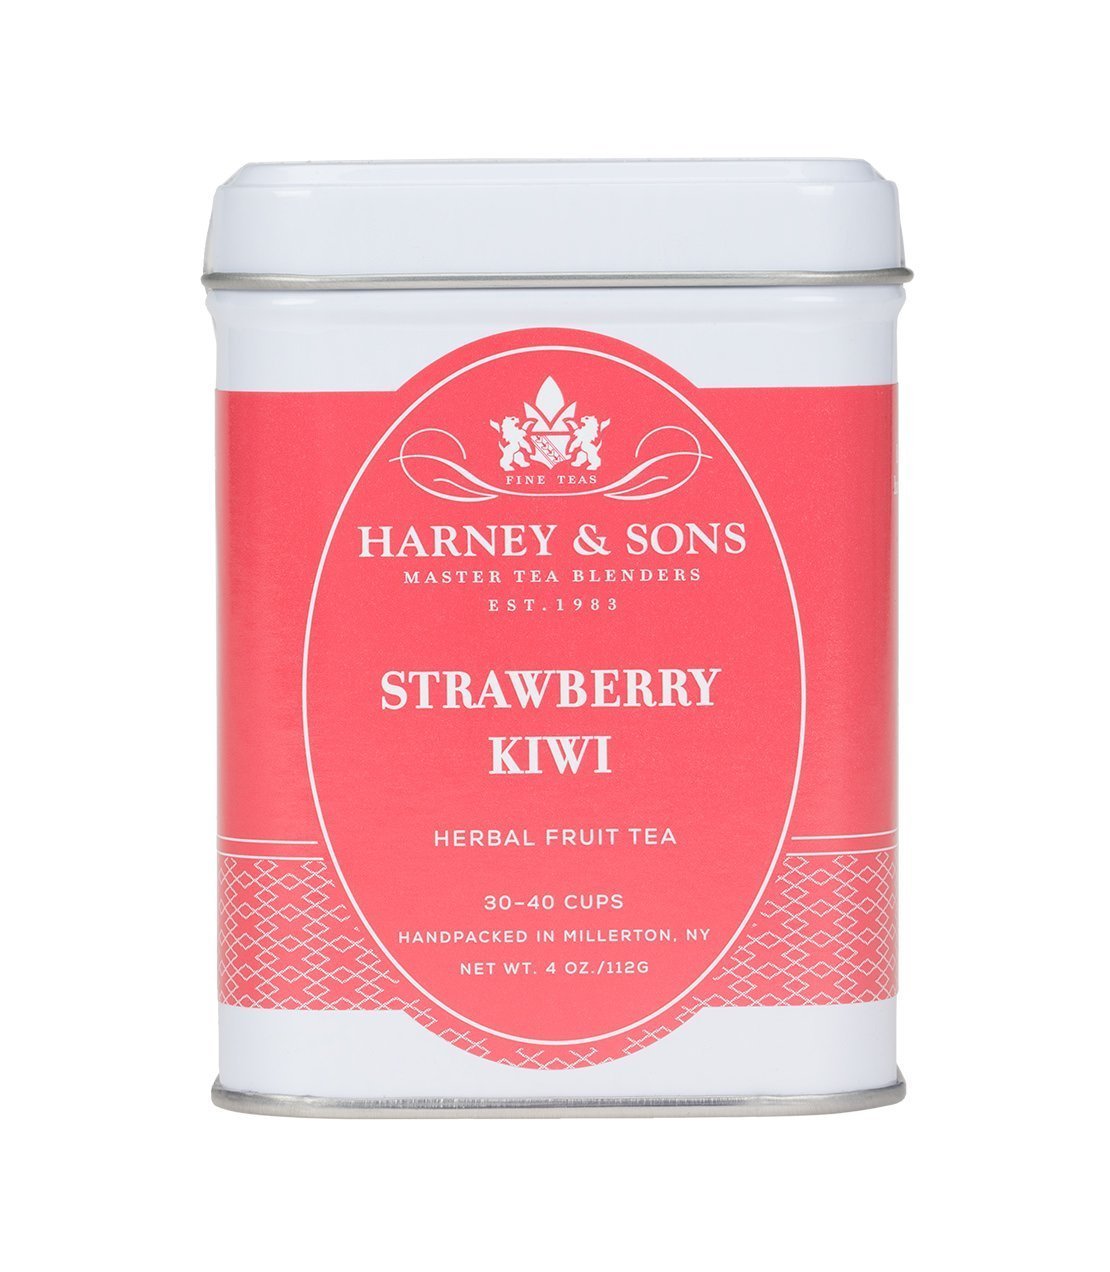 Strawberry & Kiwi - Harney & Sons Teas, European Distribution Center